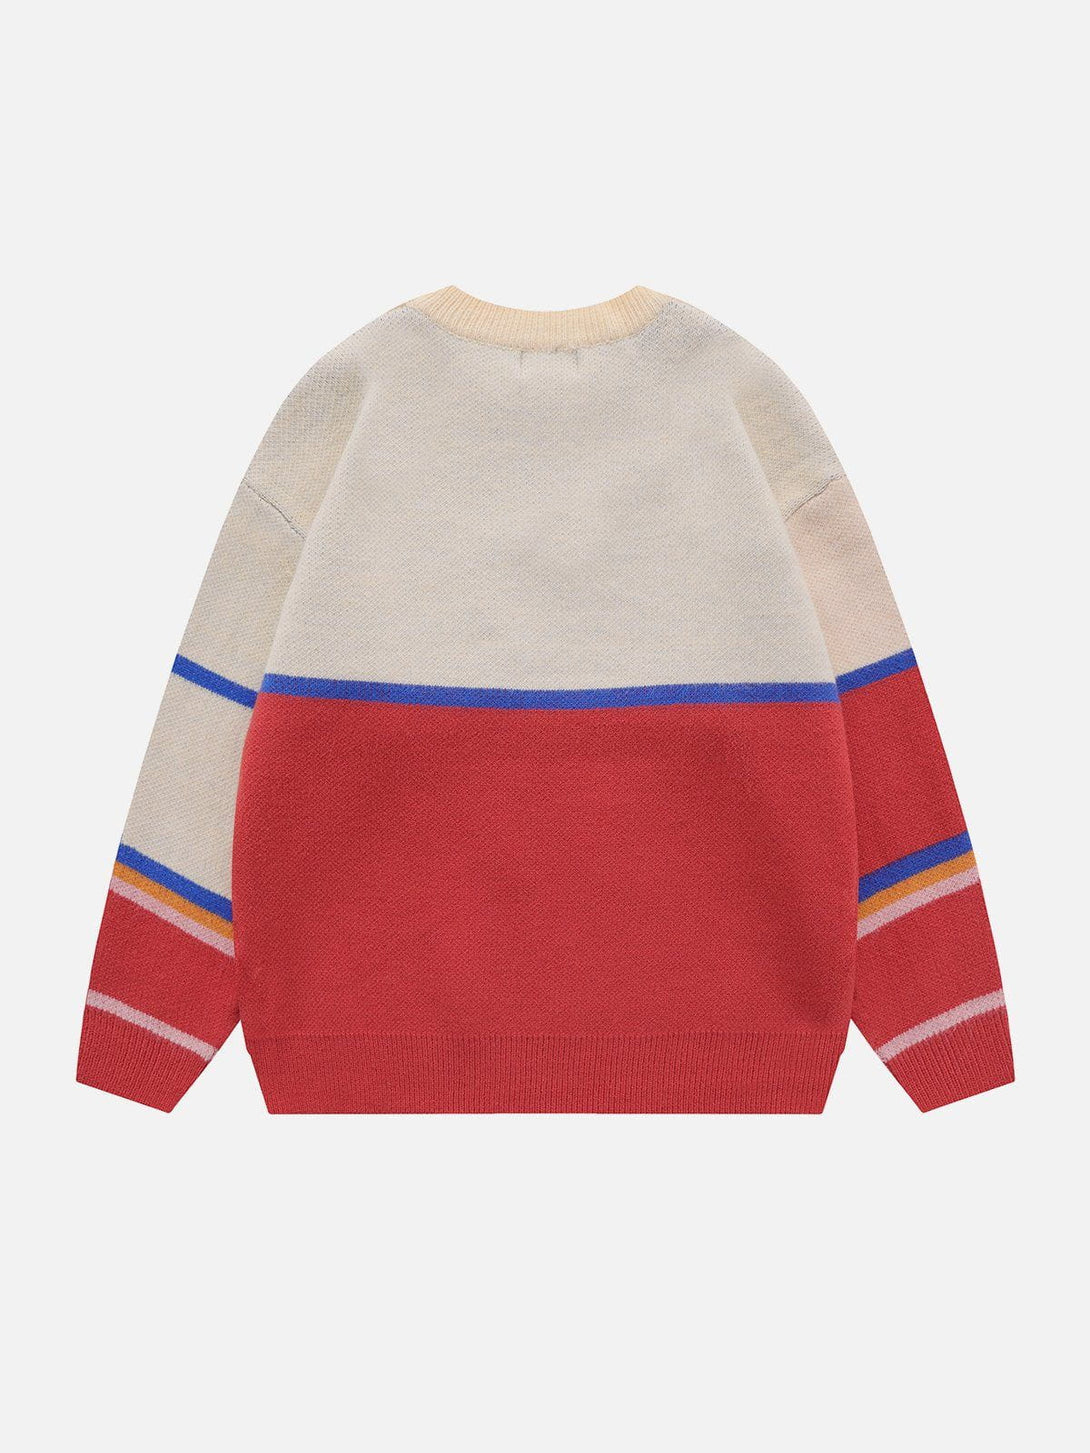 Majesda® - Flower Print Colorblock Sweater outfit ideas streetwear fashion